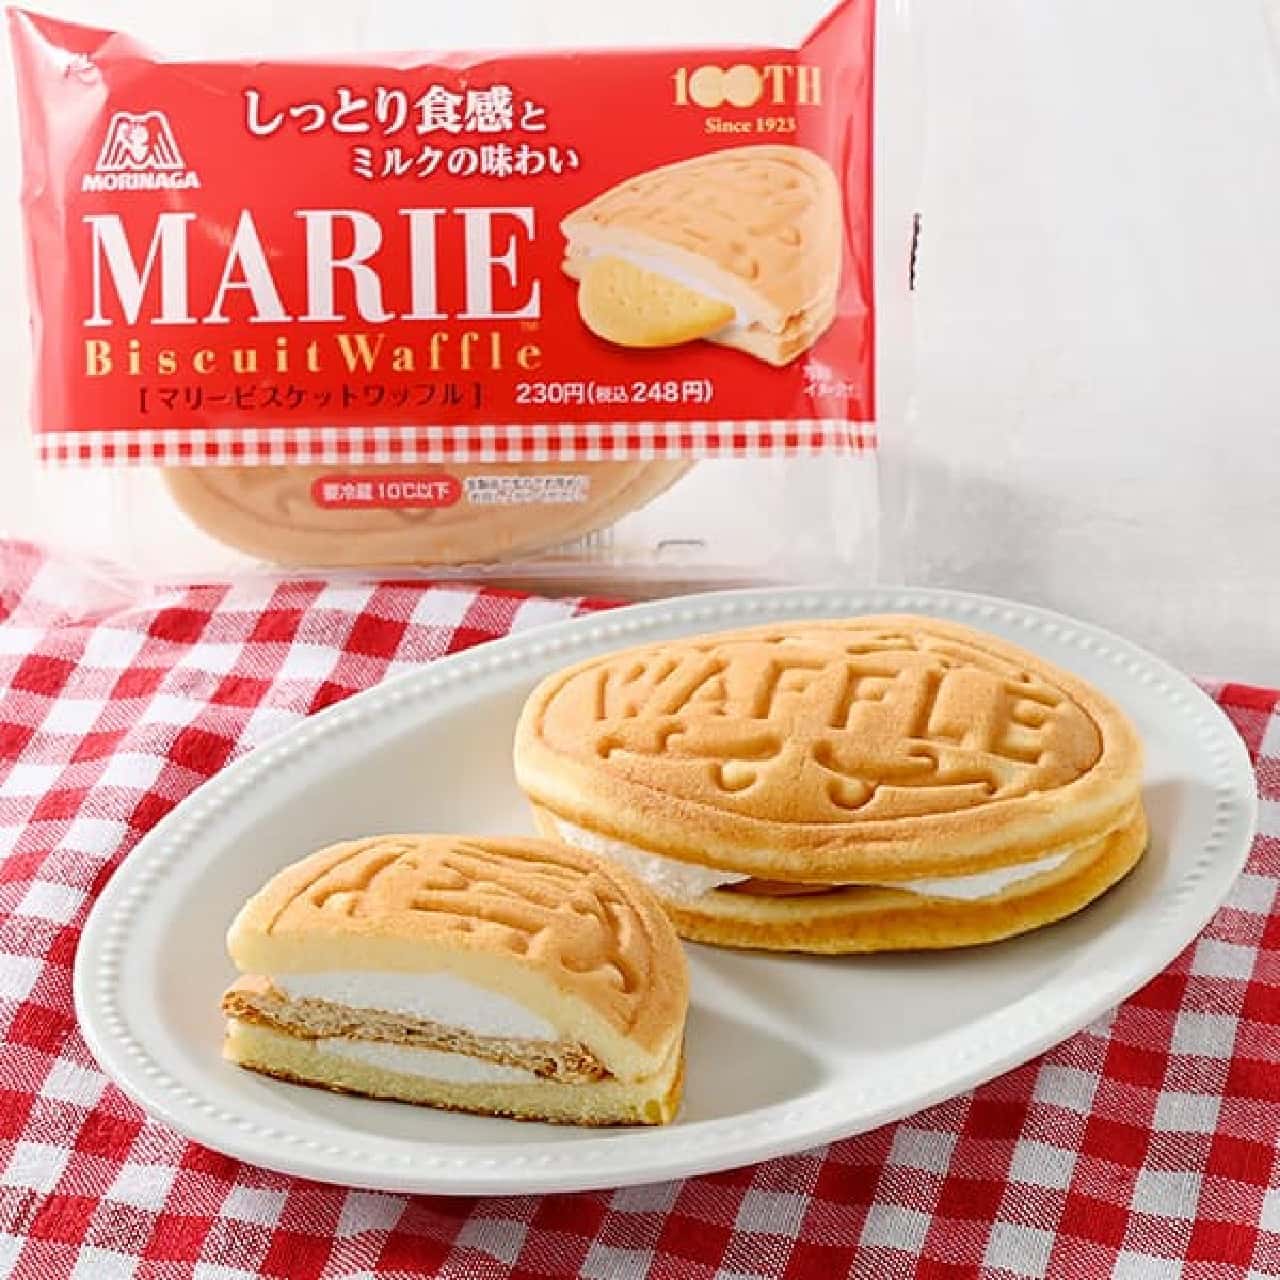 FamilyMart "Marie Biscuit Waffle